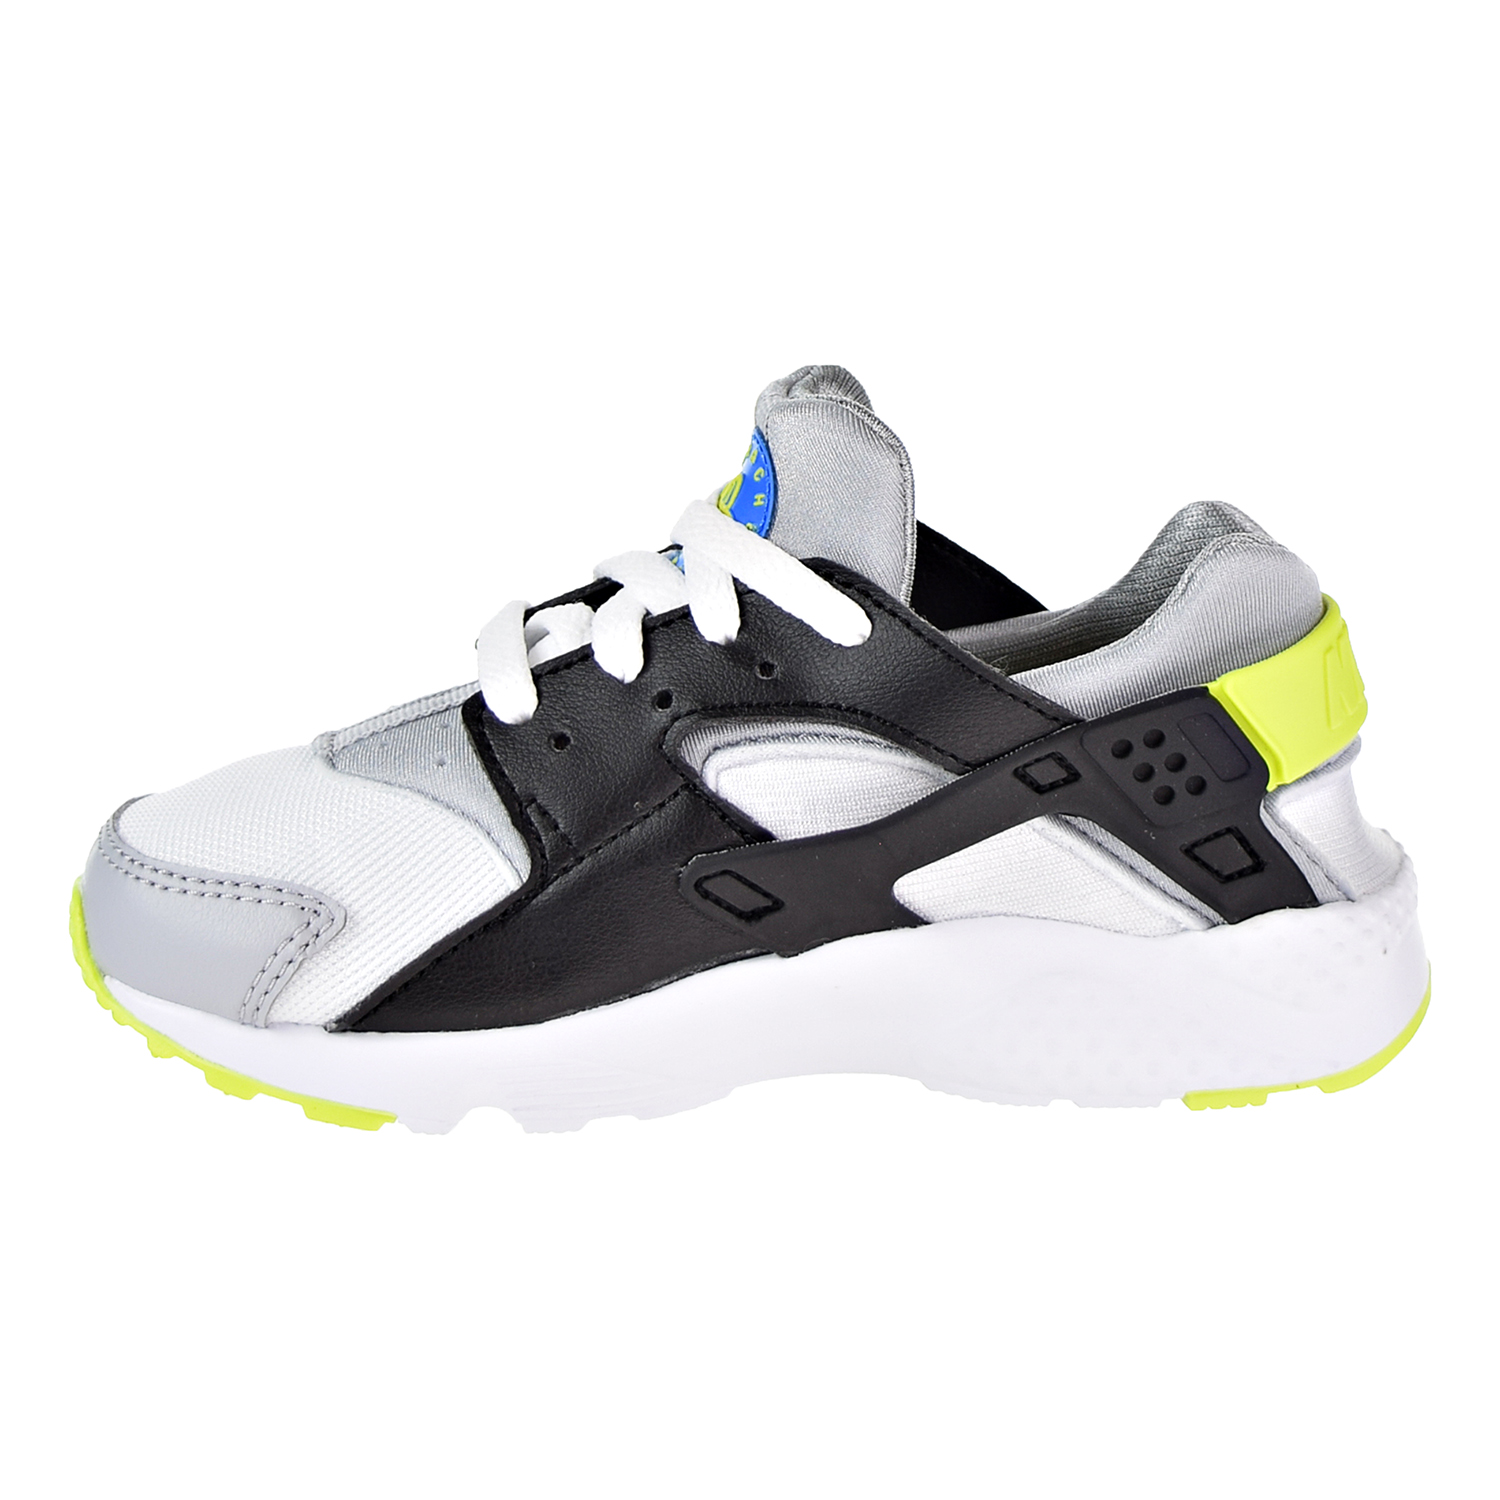 Nike Huarache Little Kid's Running Shoes University White/Cyber/Photo Blue 704949-112 - image 4 of 6